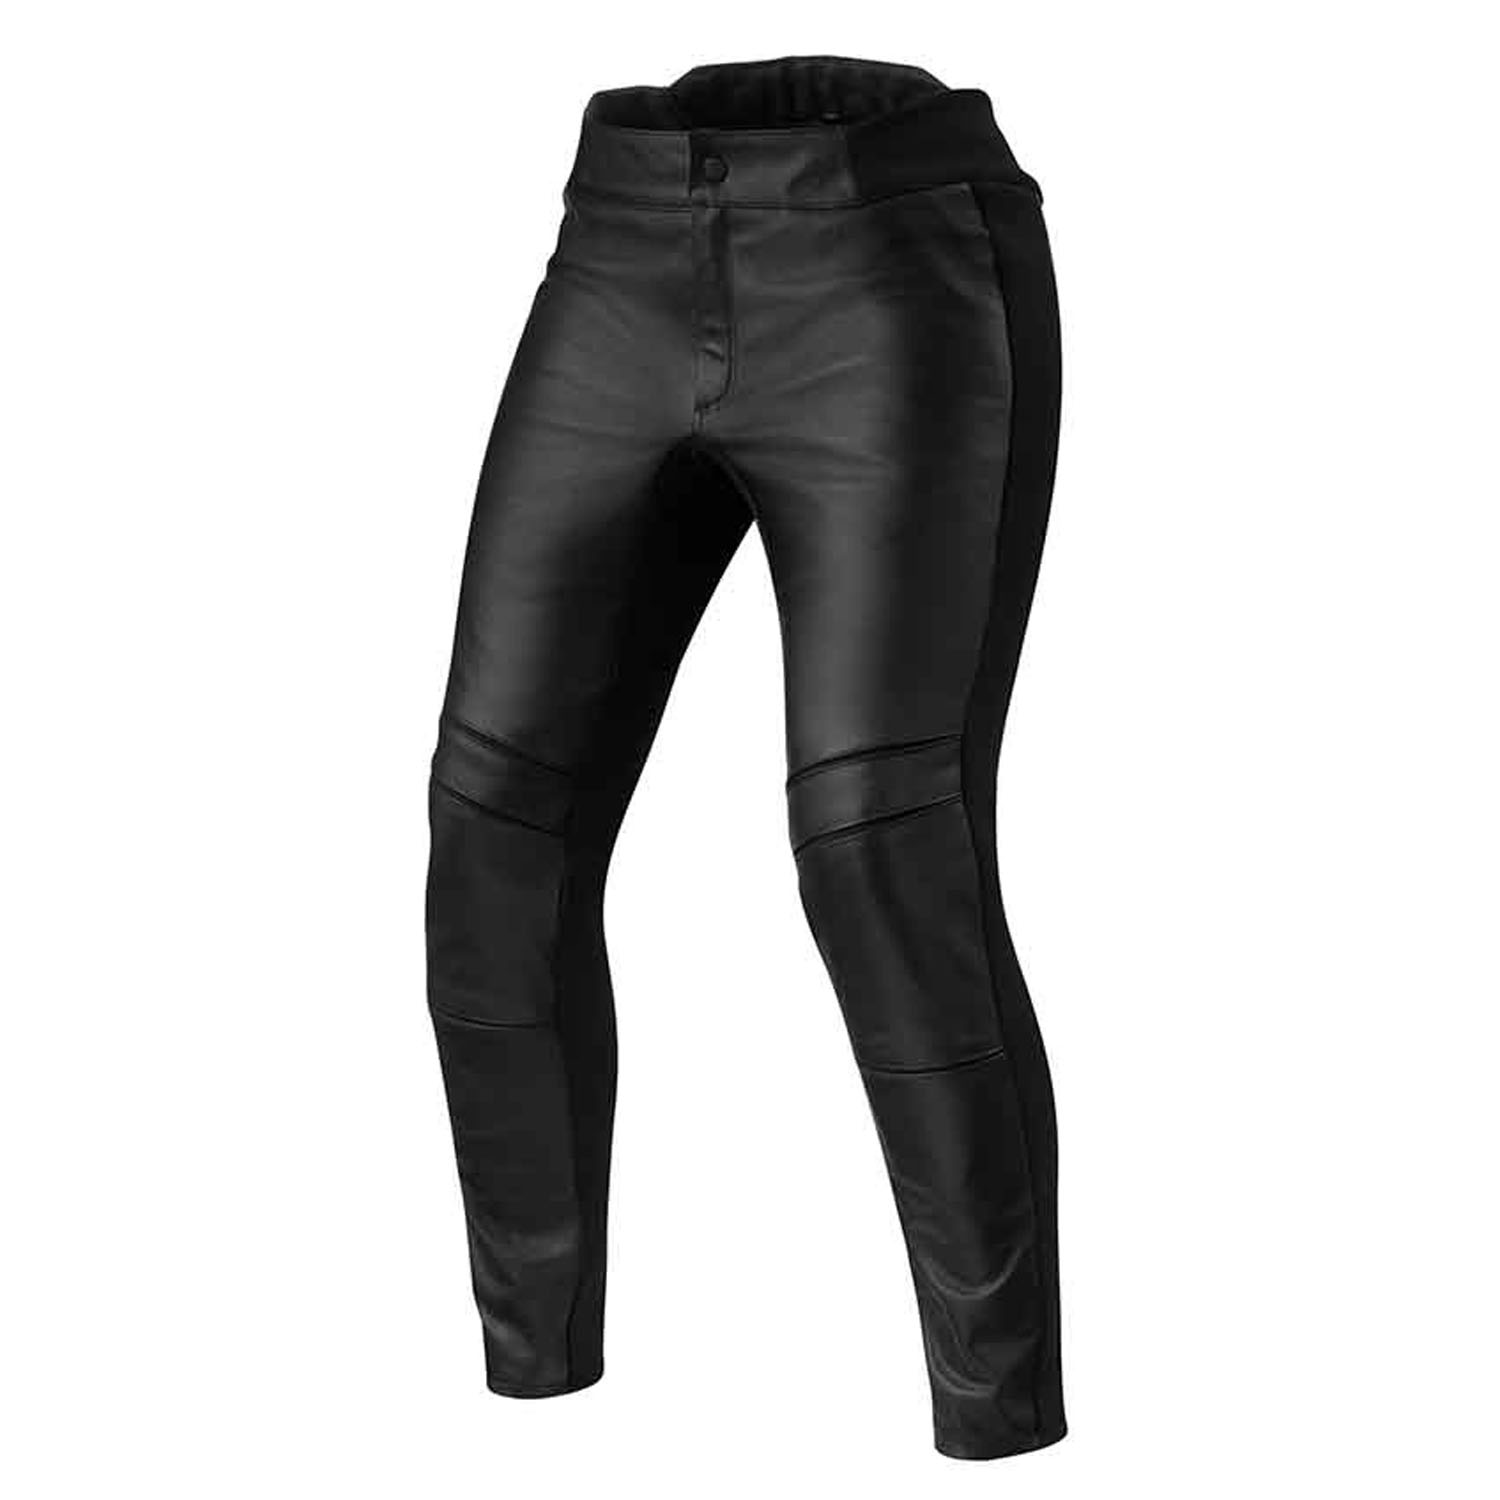 Image of REV'IT! Maci Ladies Black Short Motorcycle Pants Size 40 ID 8700001359146